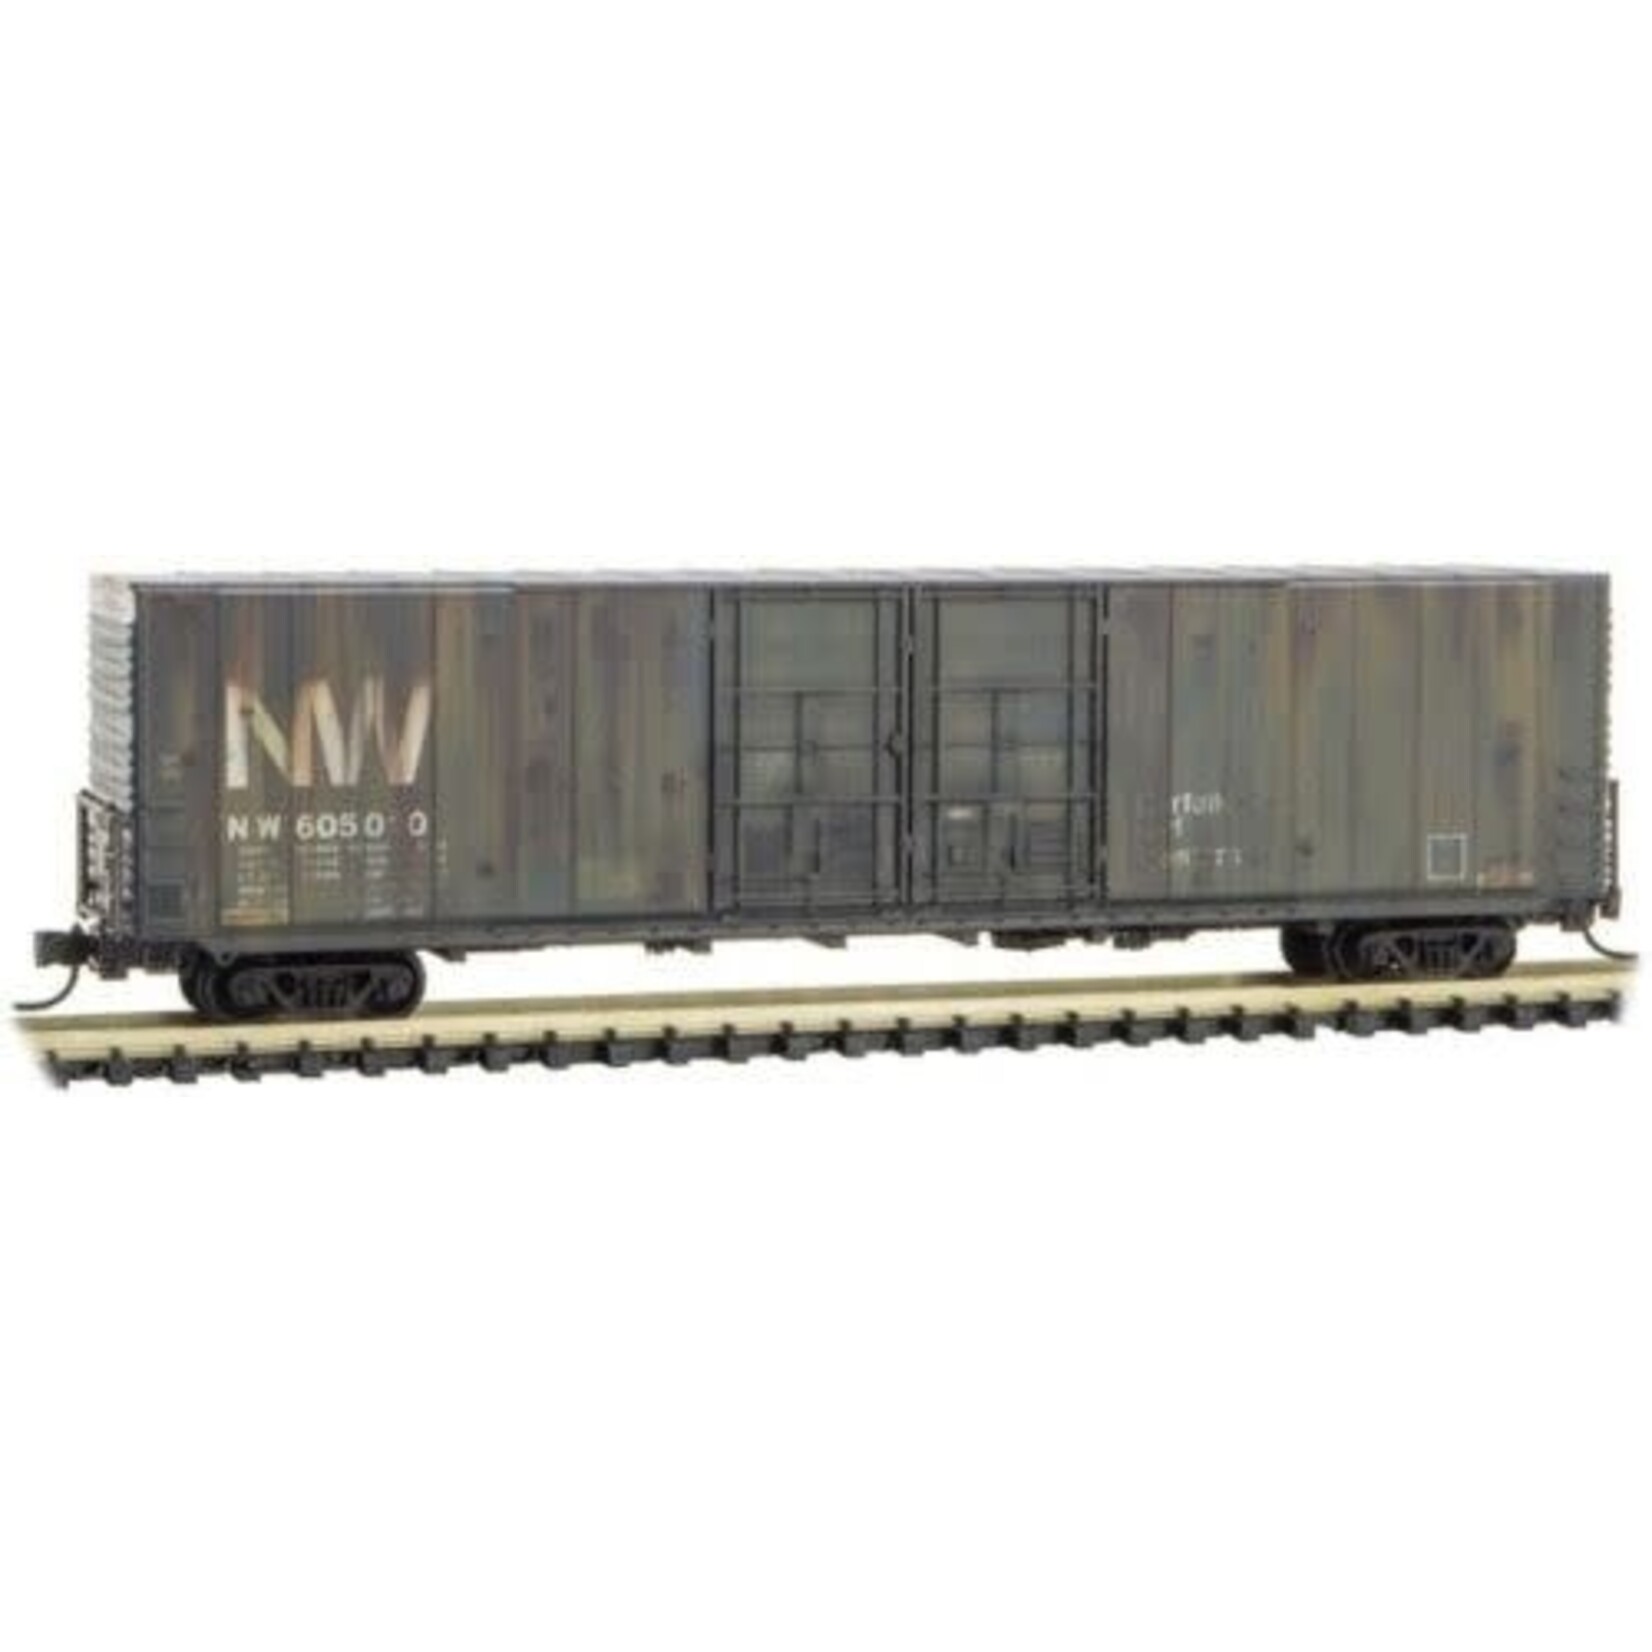 Micro Trains Line 10244040 N N&W Weathered Single Rd # 605010